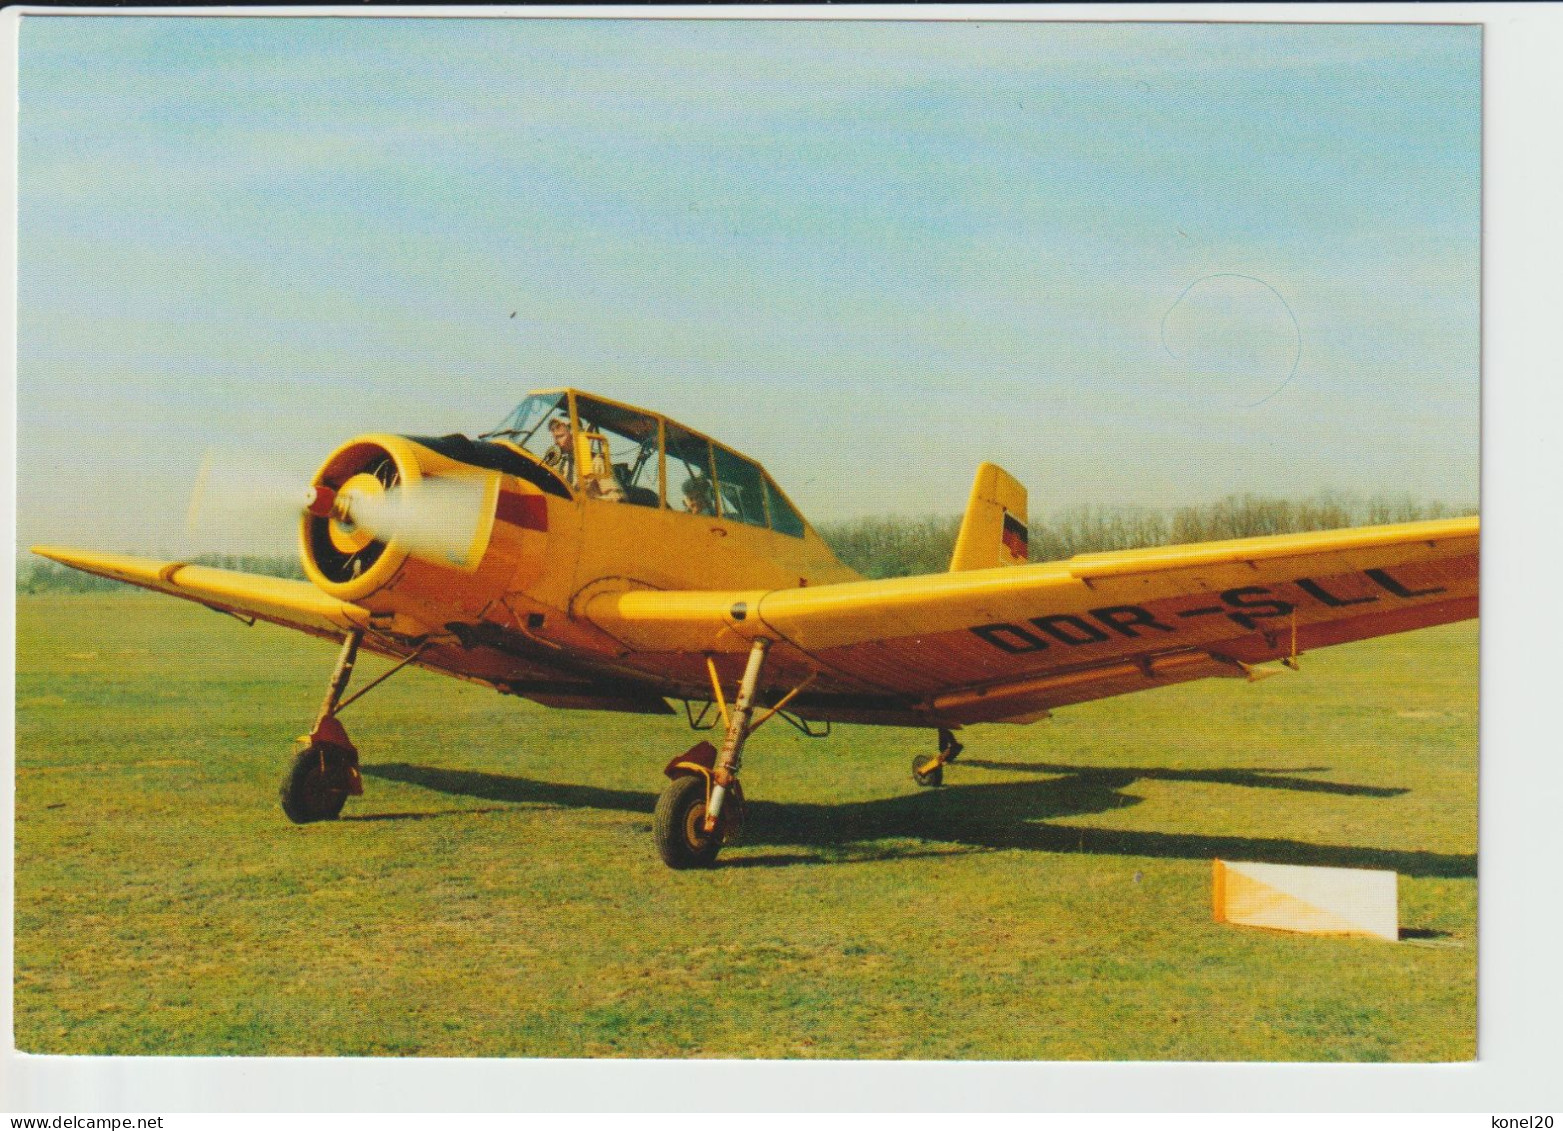 Vintage Pc Interflug Air-Touristik Antonov Aircraft. - 1919-1938: Between Wars